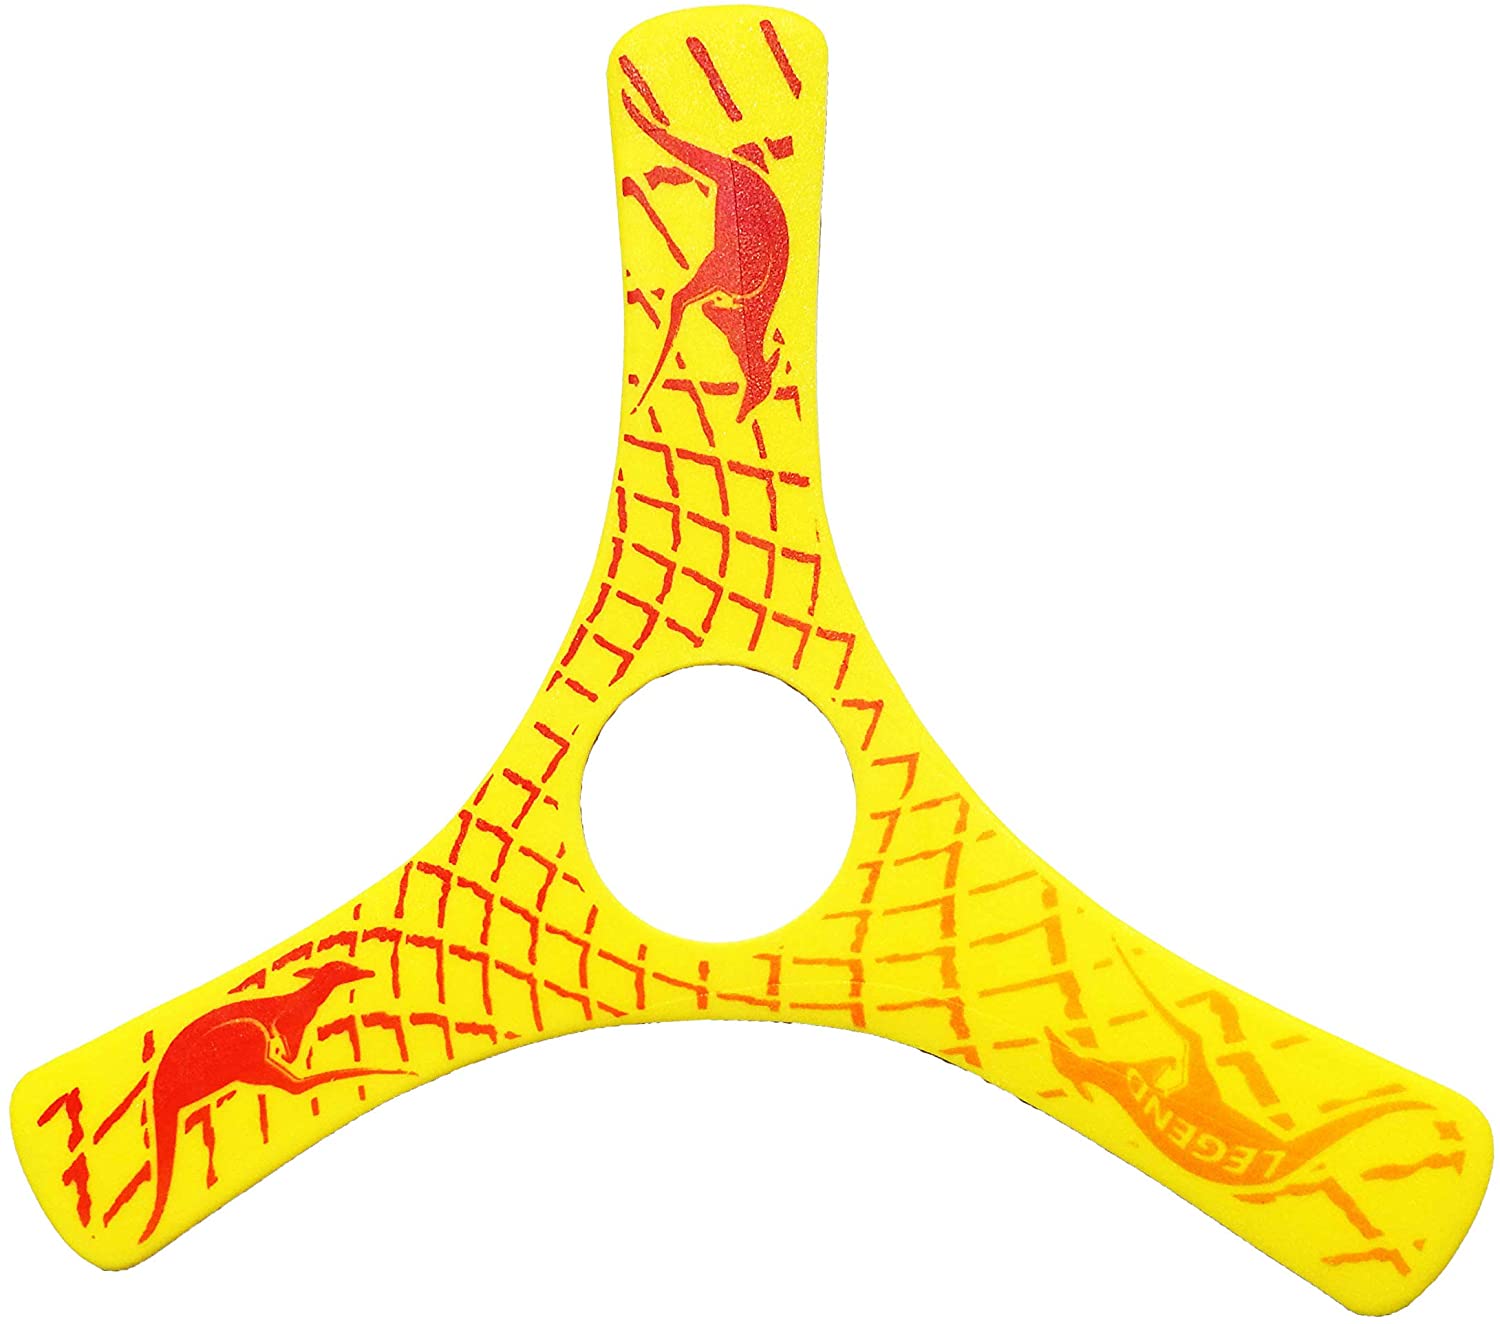 Spin Racer boomerang - Yellow